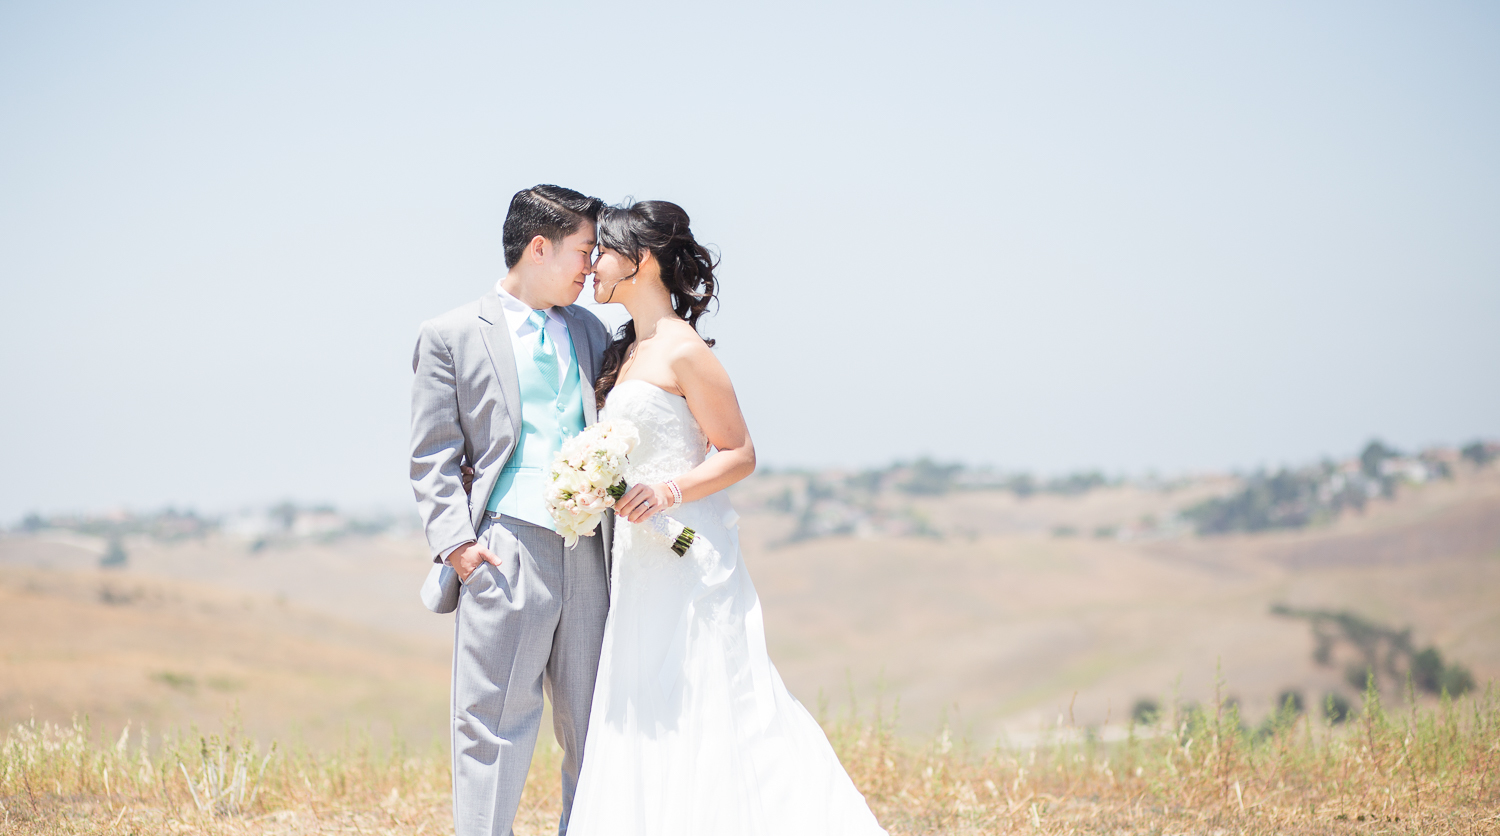 Melissa & Kenny Wedding | LifeSong Church & Royal Vista Golf Club in Chino Hills, CA